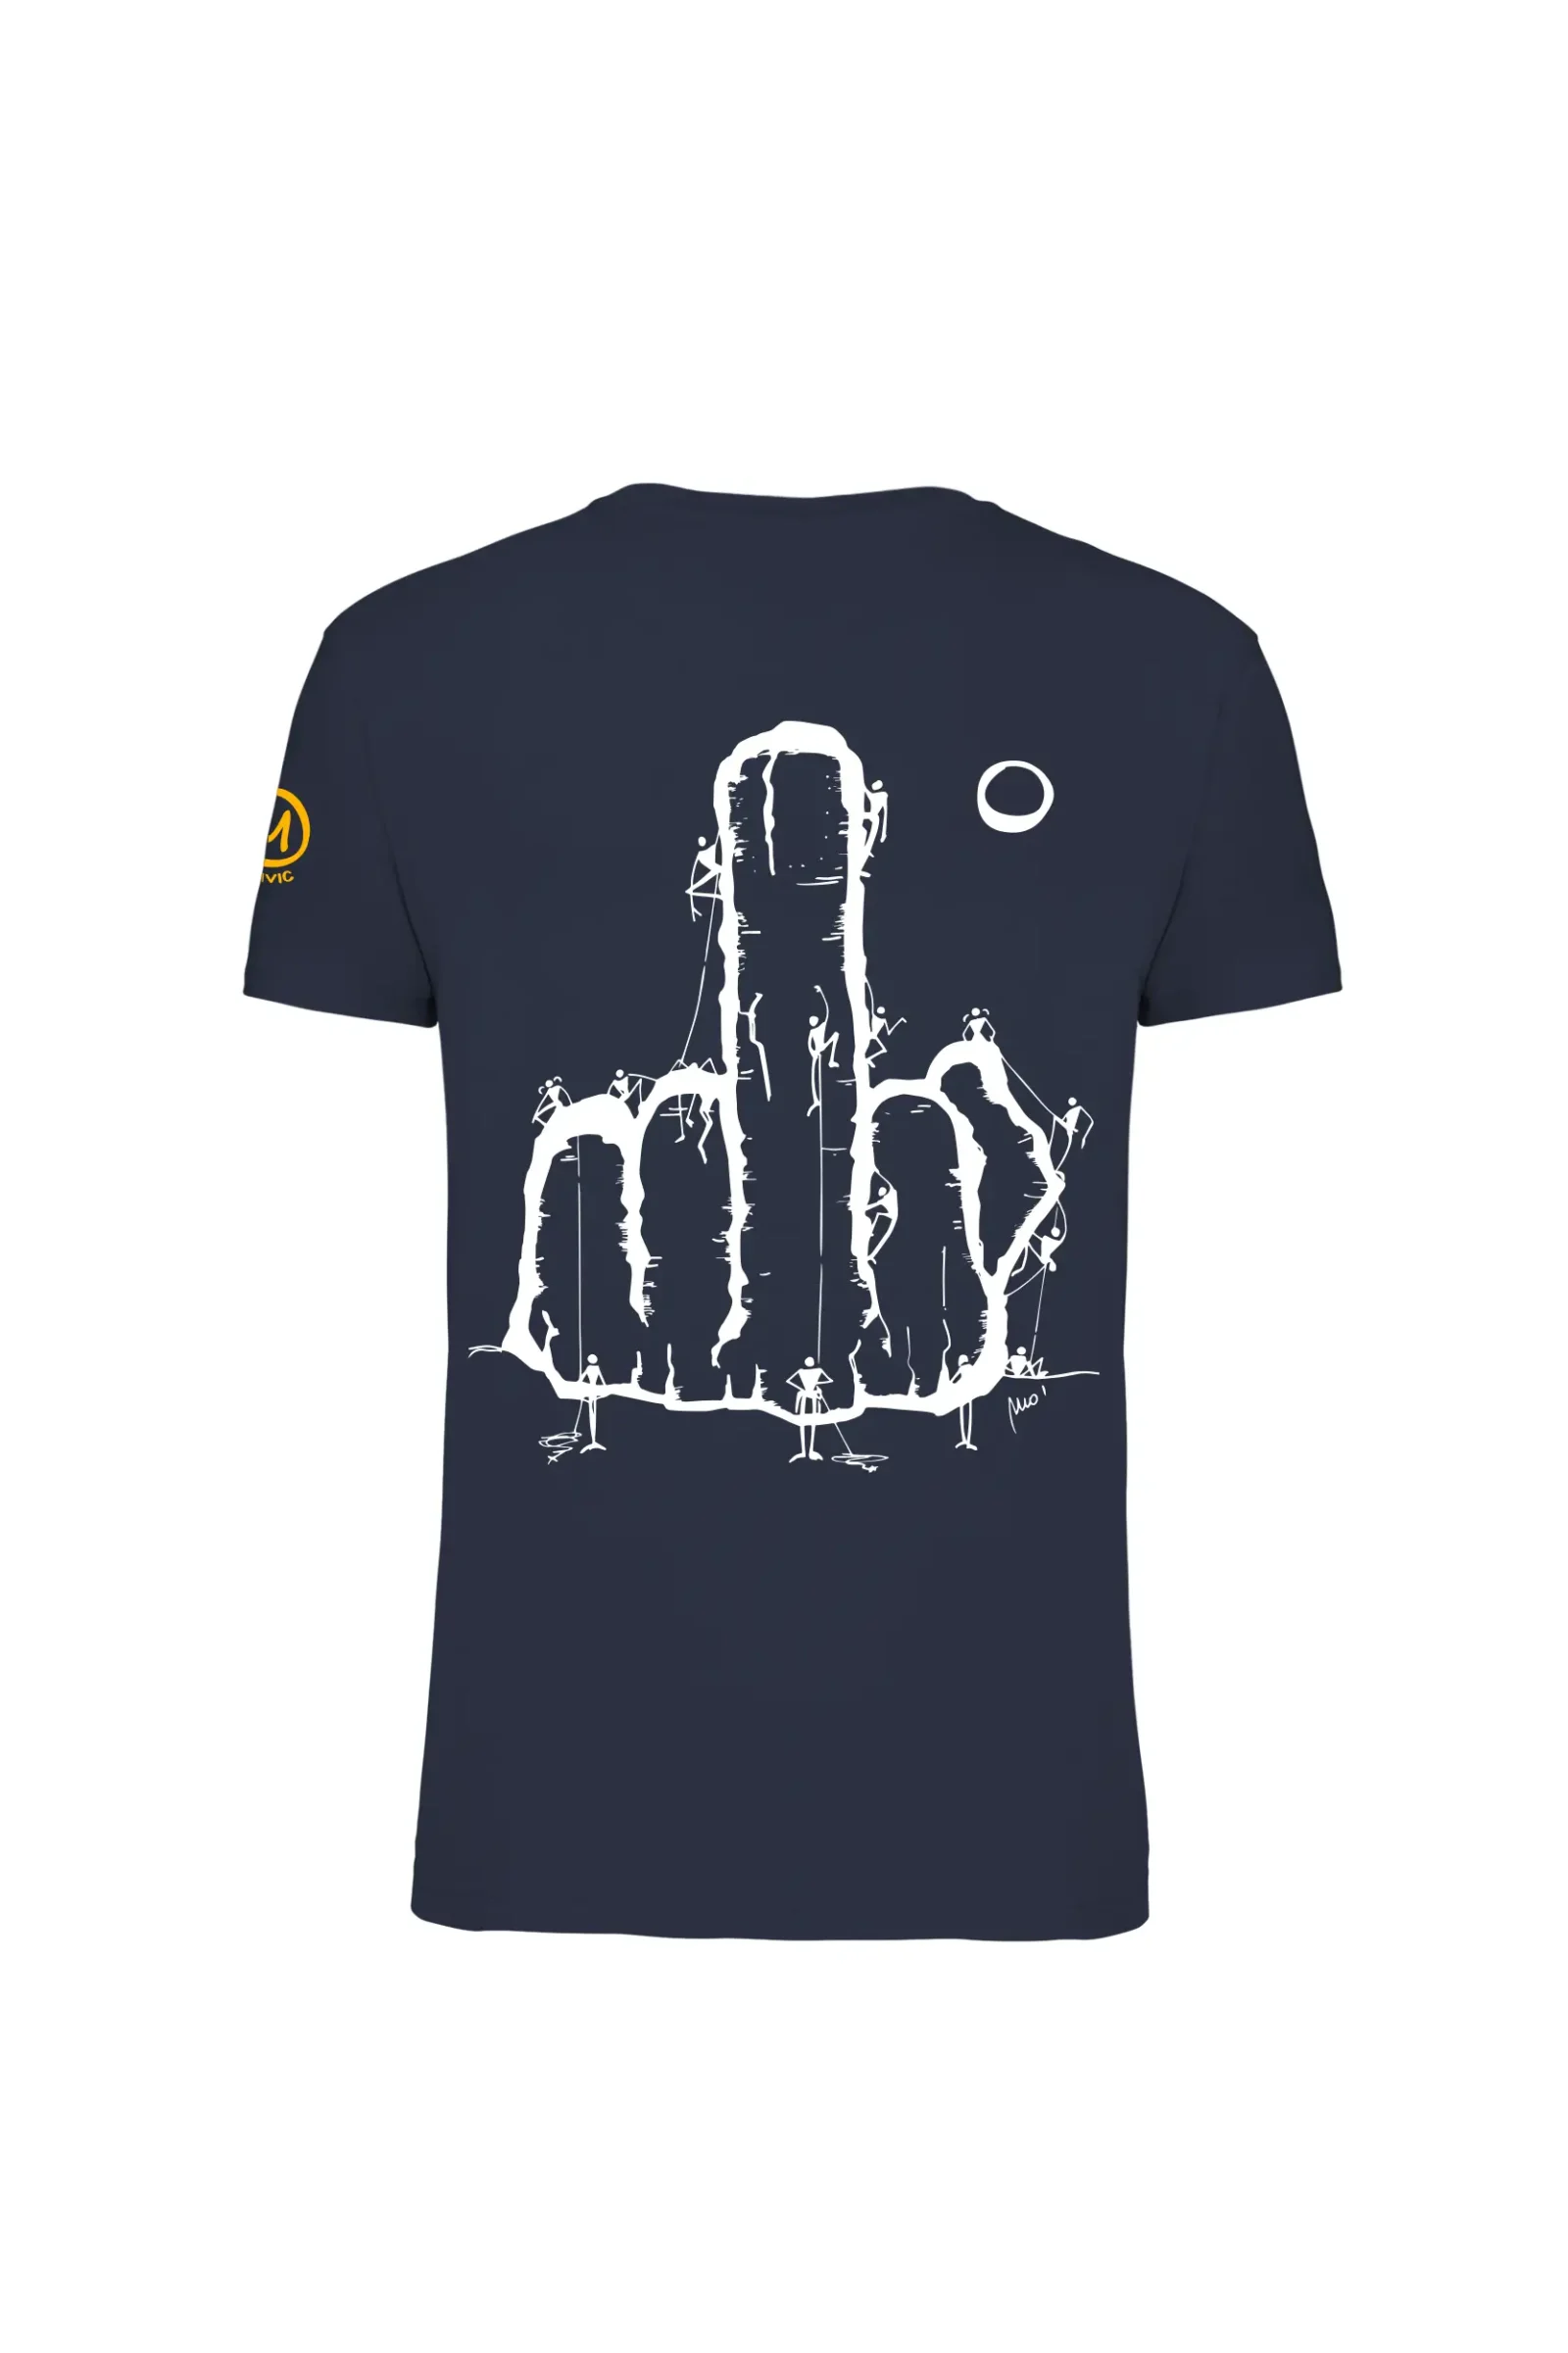 T-shirt d'escalade homme - coton bleu marine - graphisme "Fuck the System" - HASH MONVIC